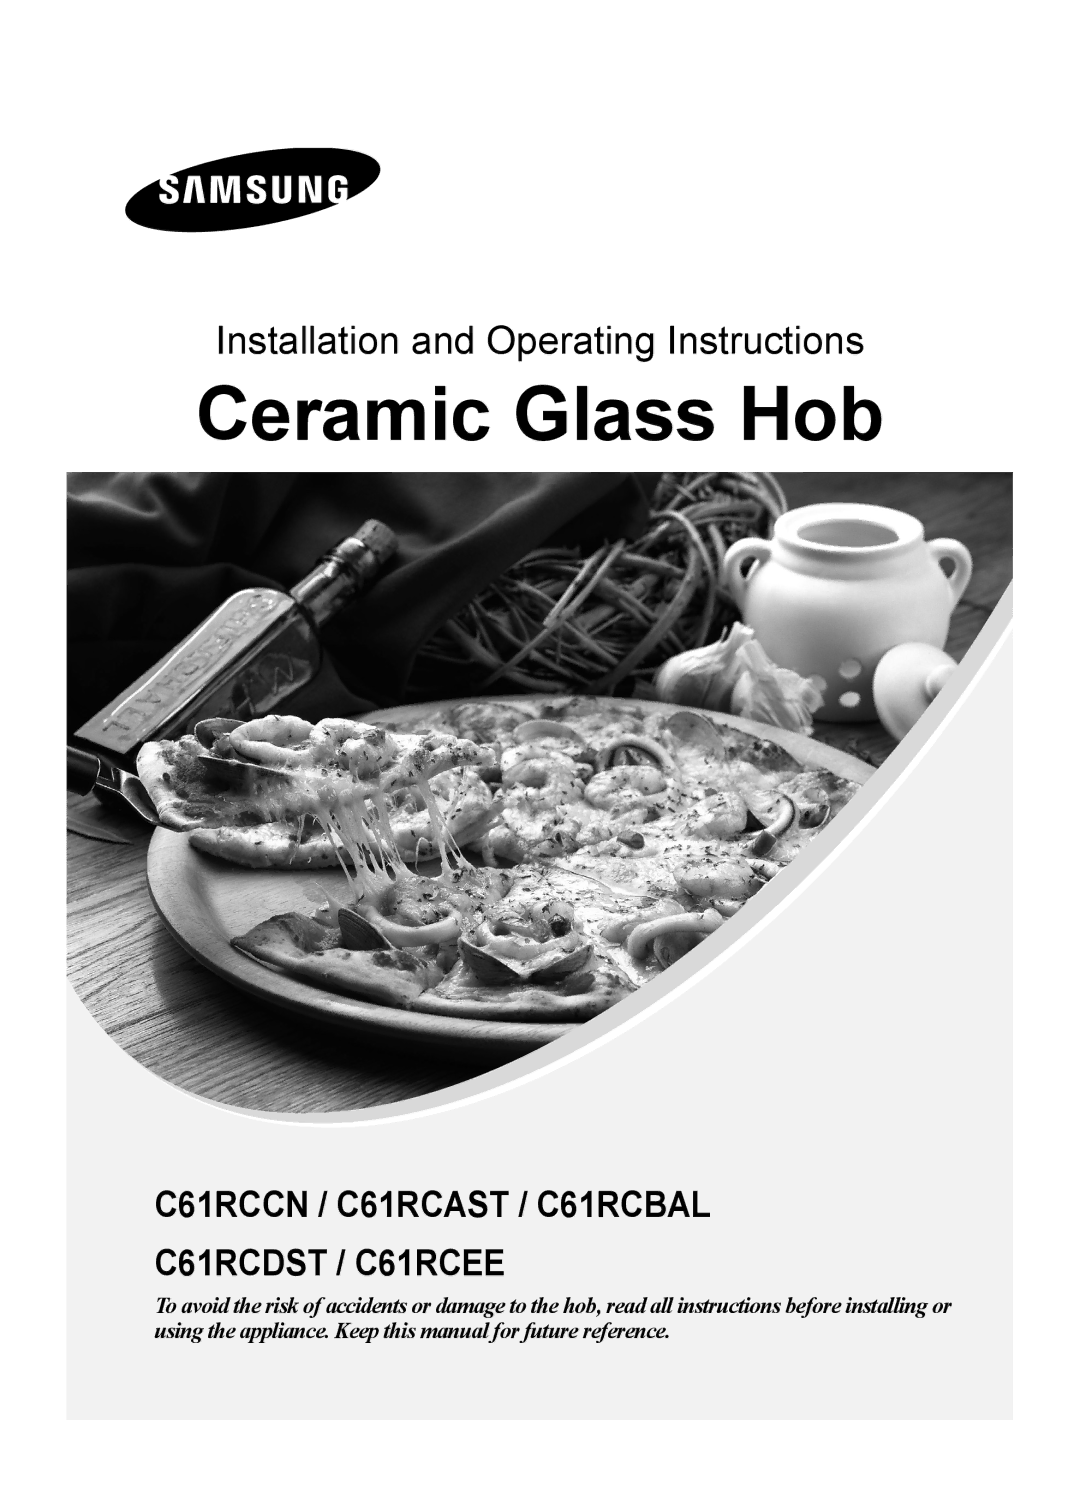 Samsung C61RCCN/SLI manual Ceramic Glass Hob 